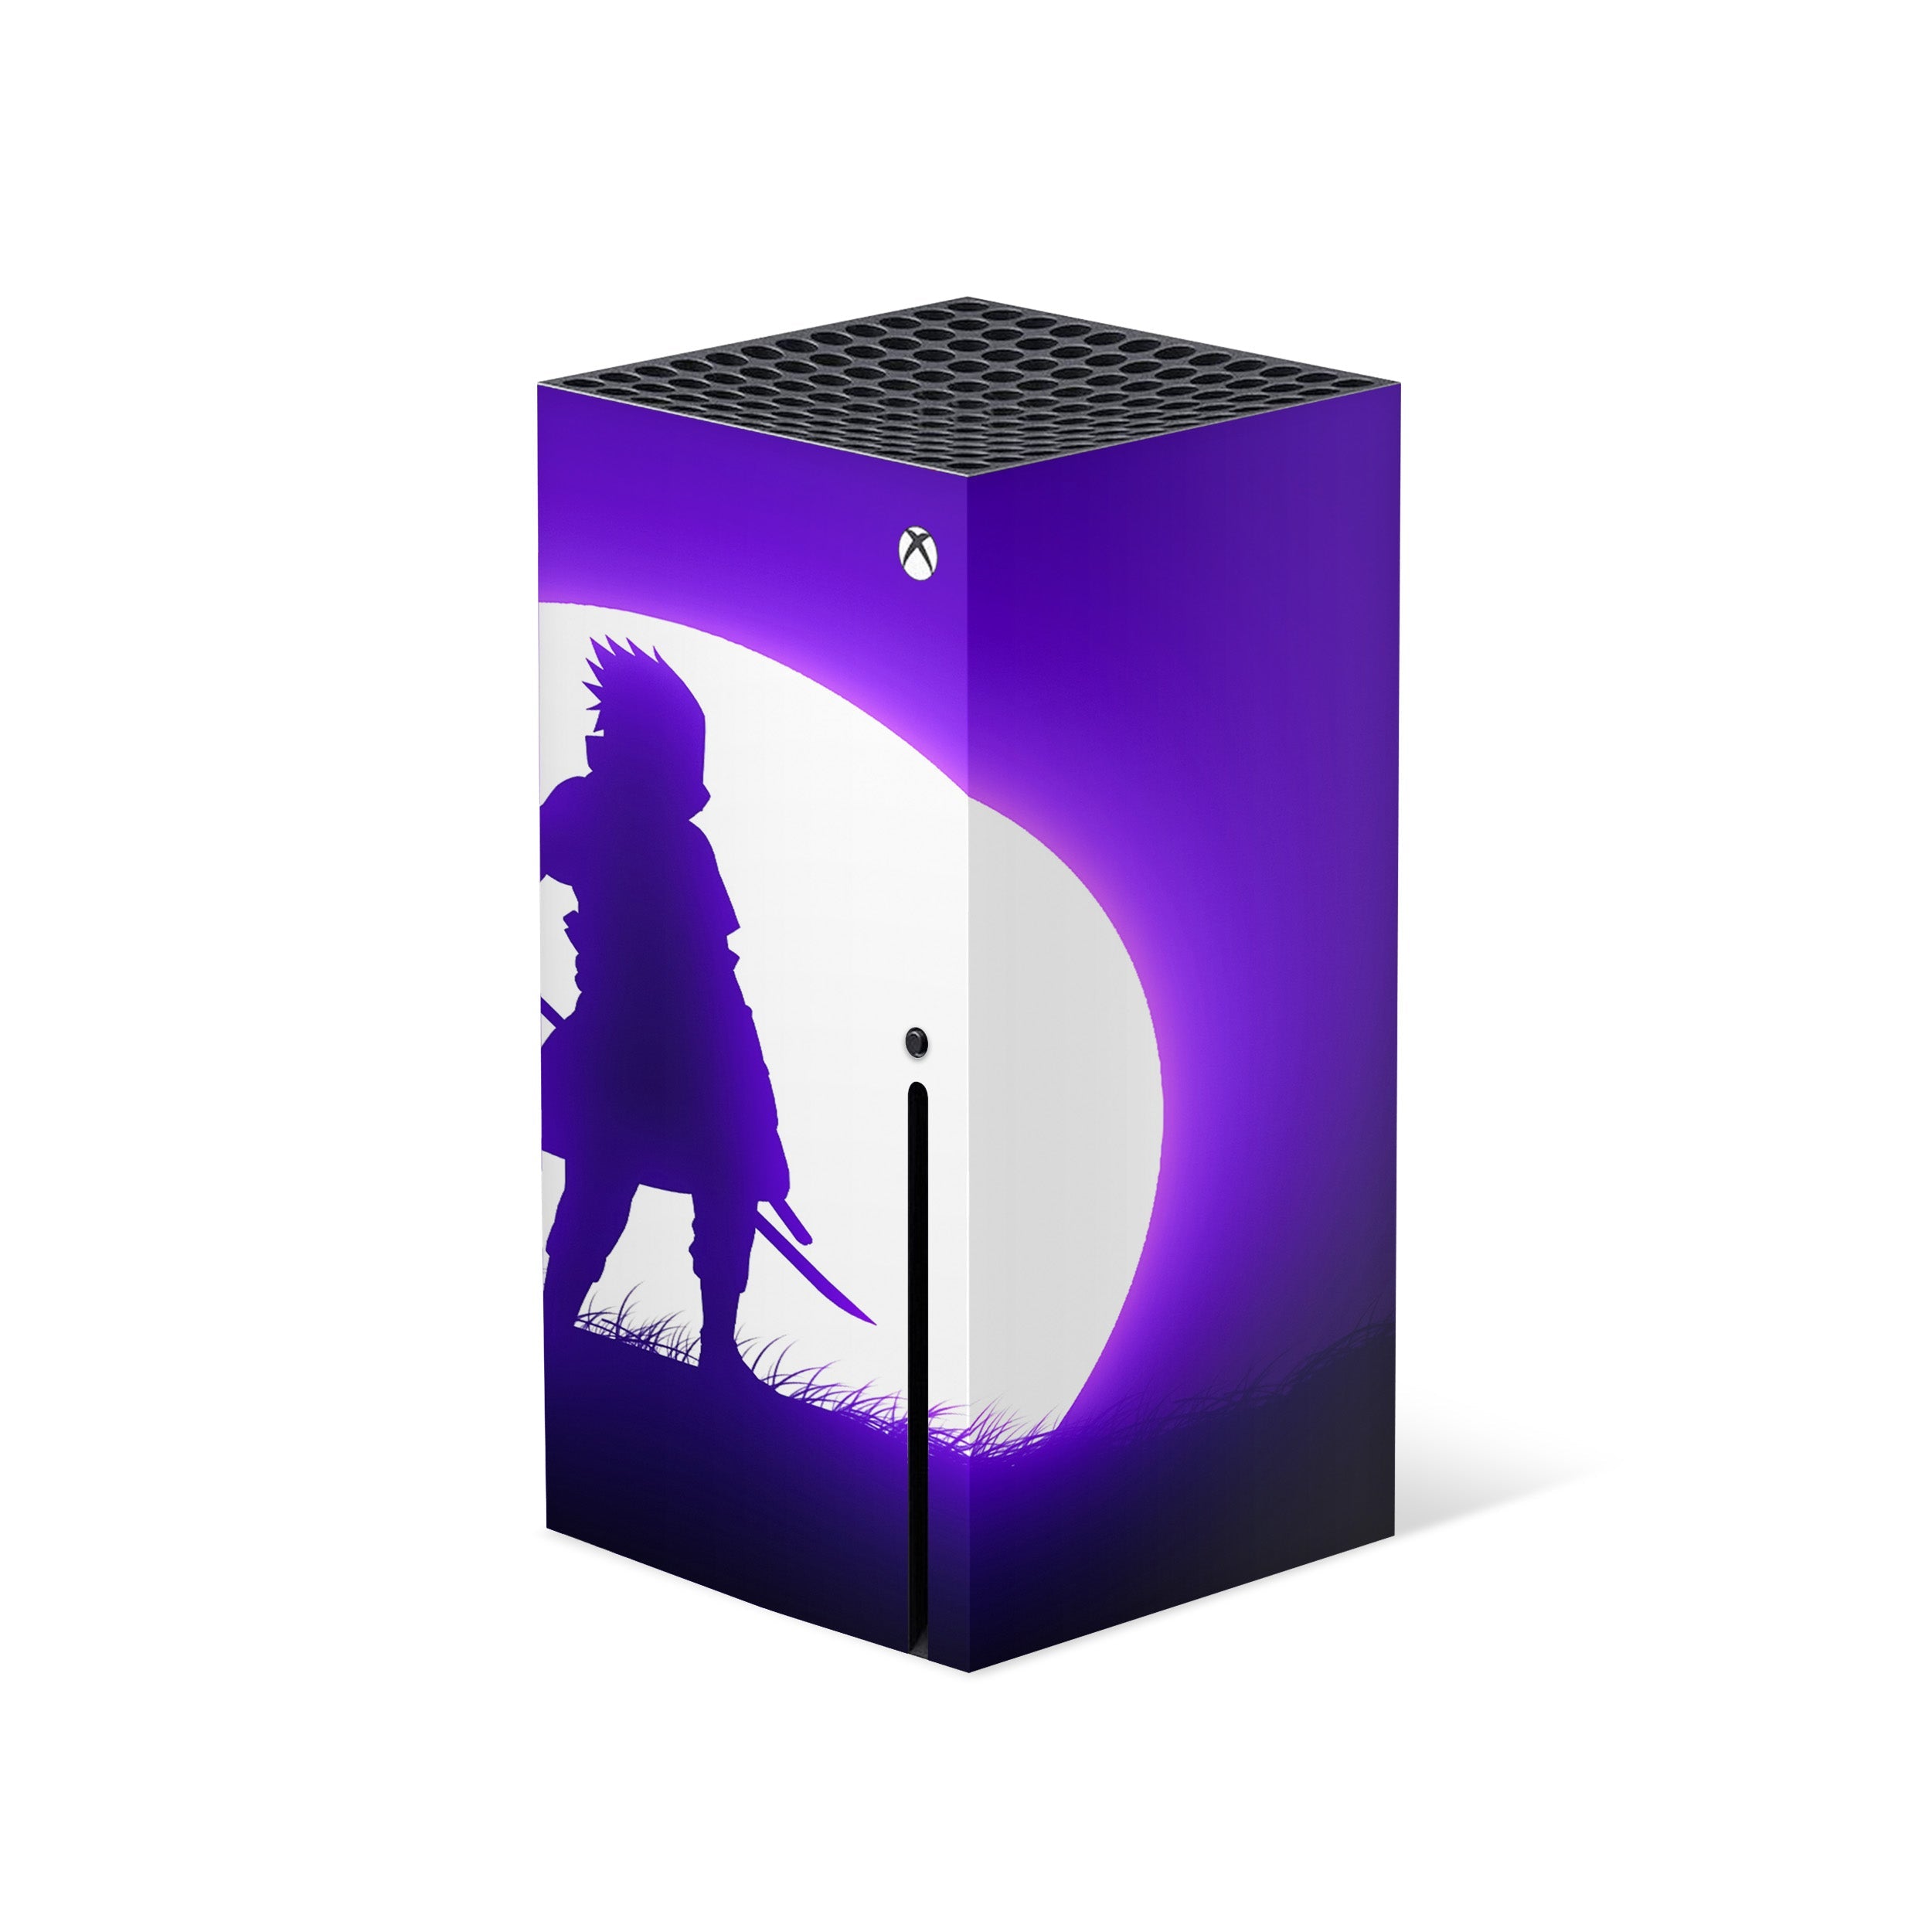 A video game skin featuring a Naruto Sasuke design for the Xbox Series X.